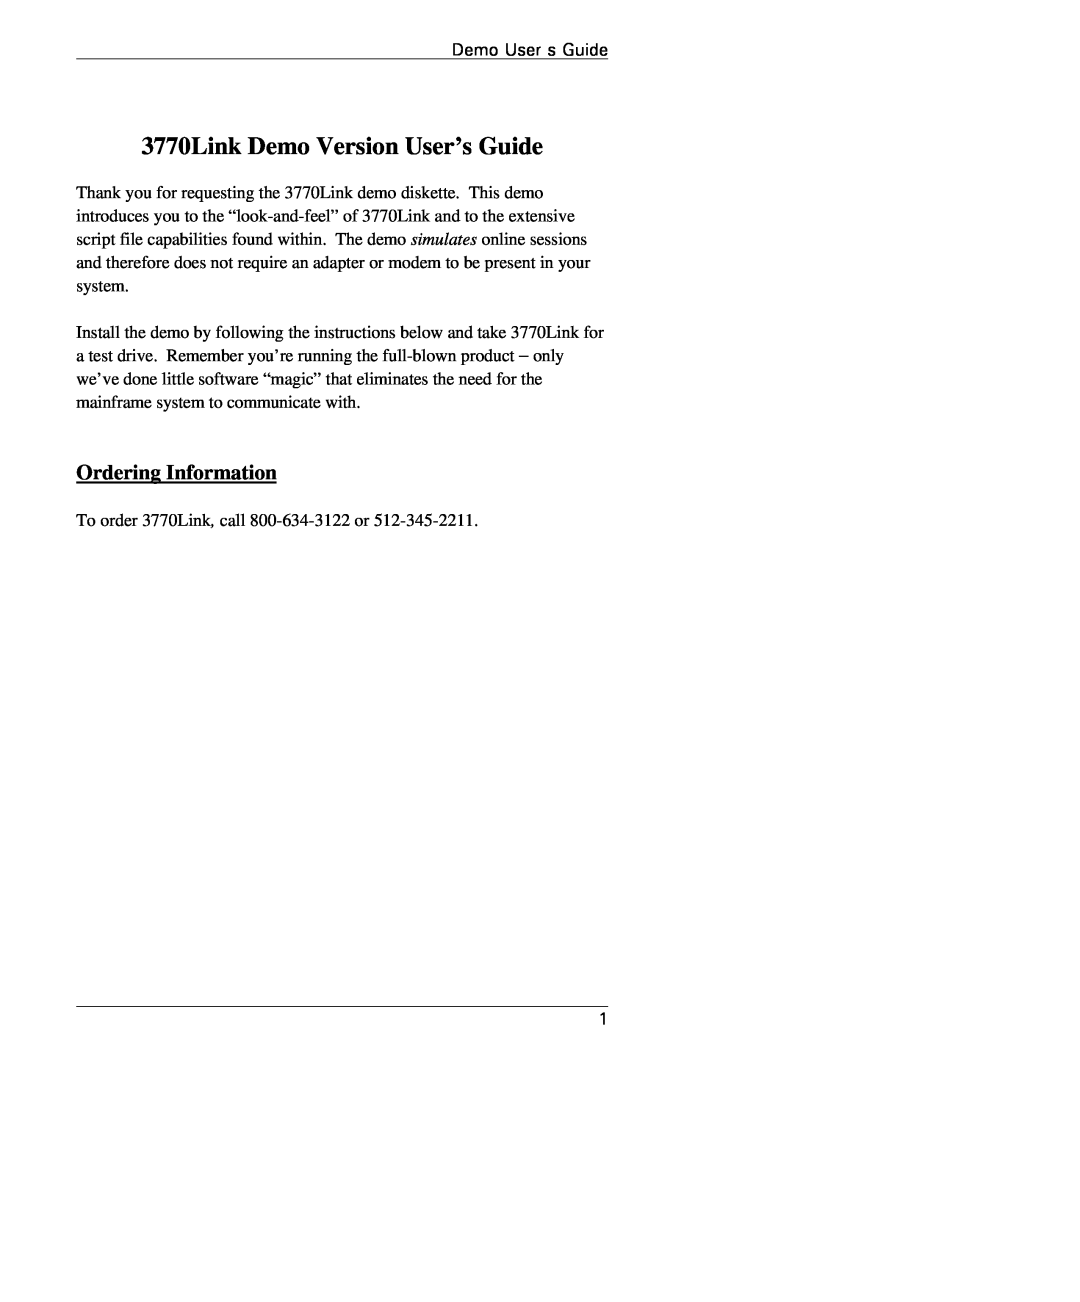 IBM manual 3770Link Demo Version User’s Guide, Ordering Information 